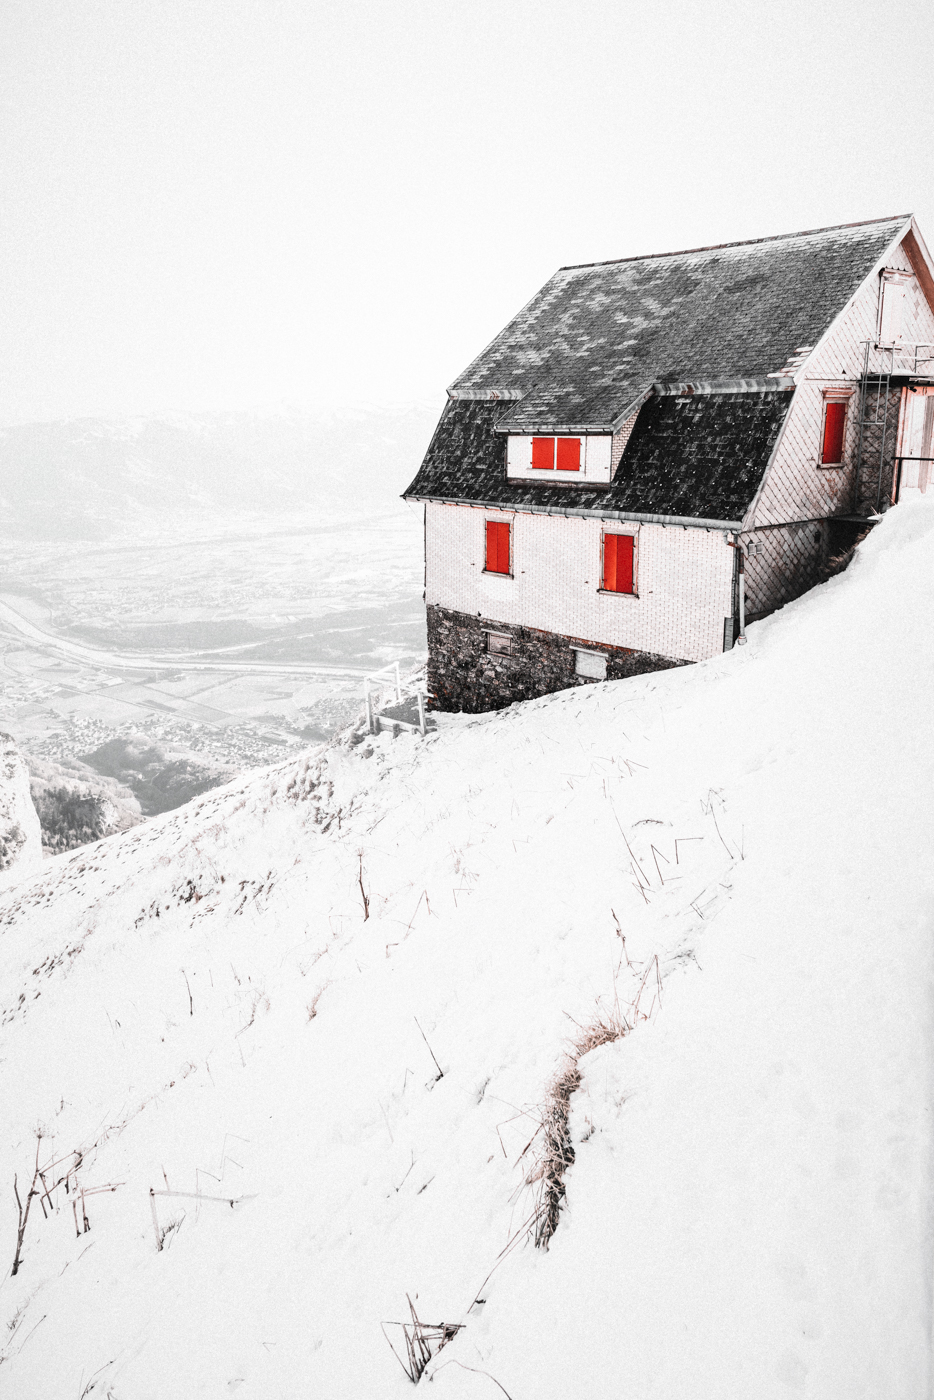 RoadTrip Switzerland vanlife winter Landscape mountains lifestyle adventure exlpore outdoors